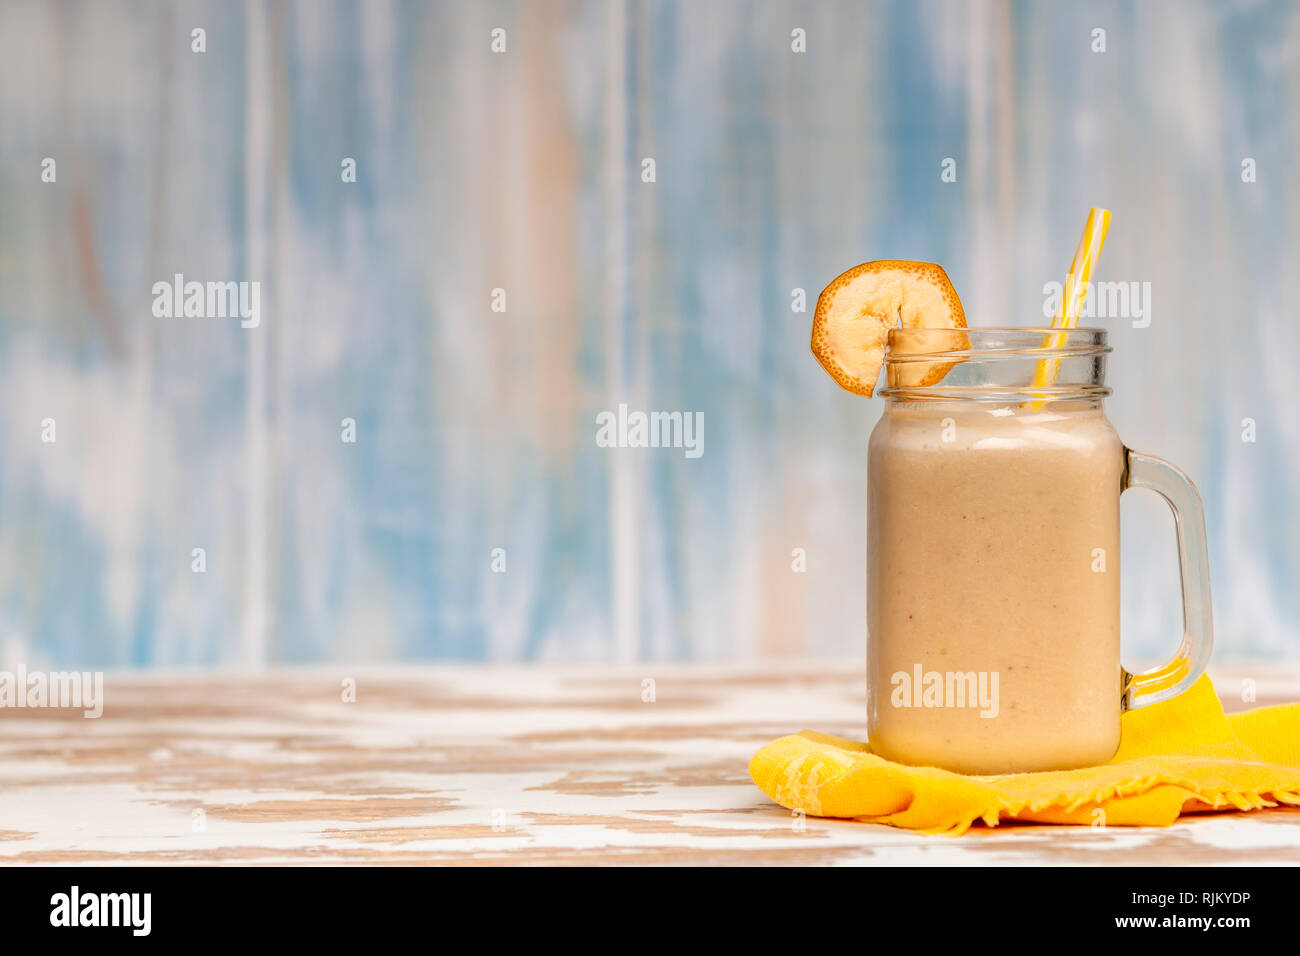 https://c8.alamy.com/comp/RJKYDP/tasty-fresh-drink-in-glass-mug-with-plastic-tube-and-slices-of-banana-on-napkin-on-wood-table-RJKYDP.jpg